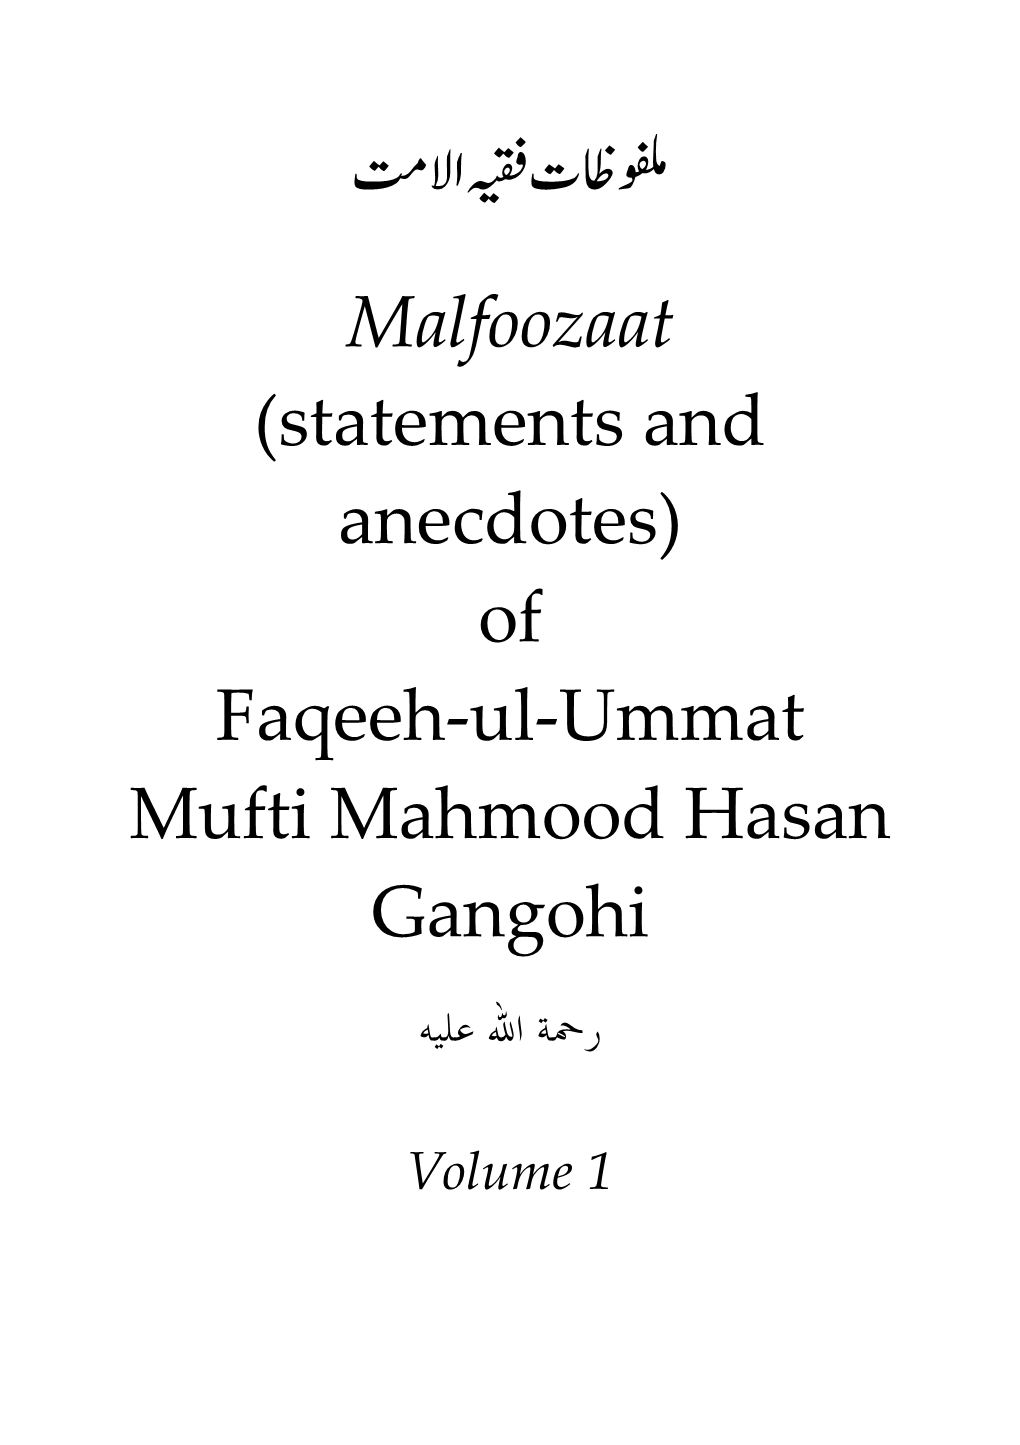 Of Faqeeh-Ul-Ummat Mufti Mahmood Hasan Gangohi